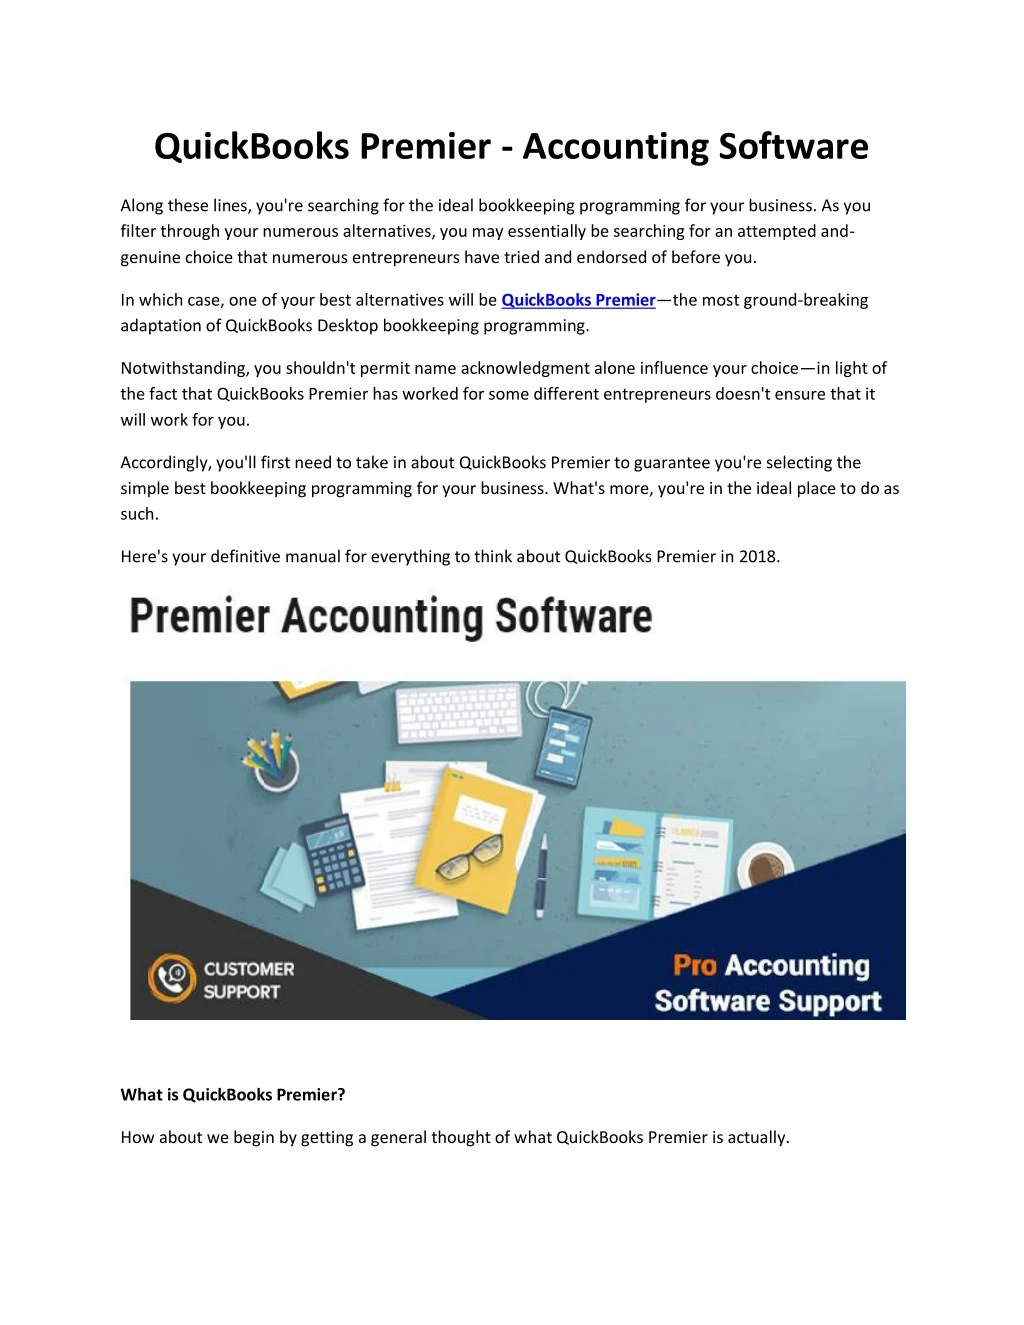 PPT QuickBooks Premier Desktop Accounting Software PowerPoint